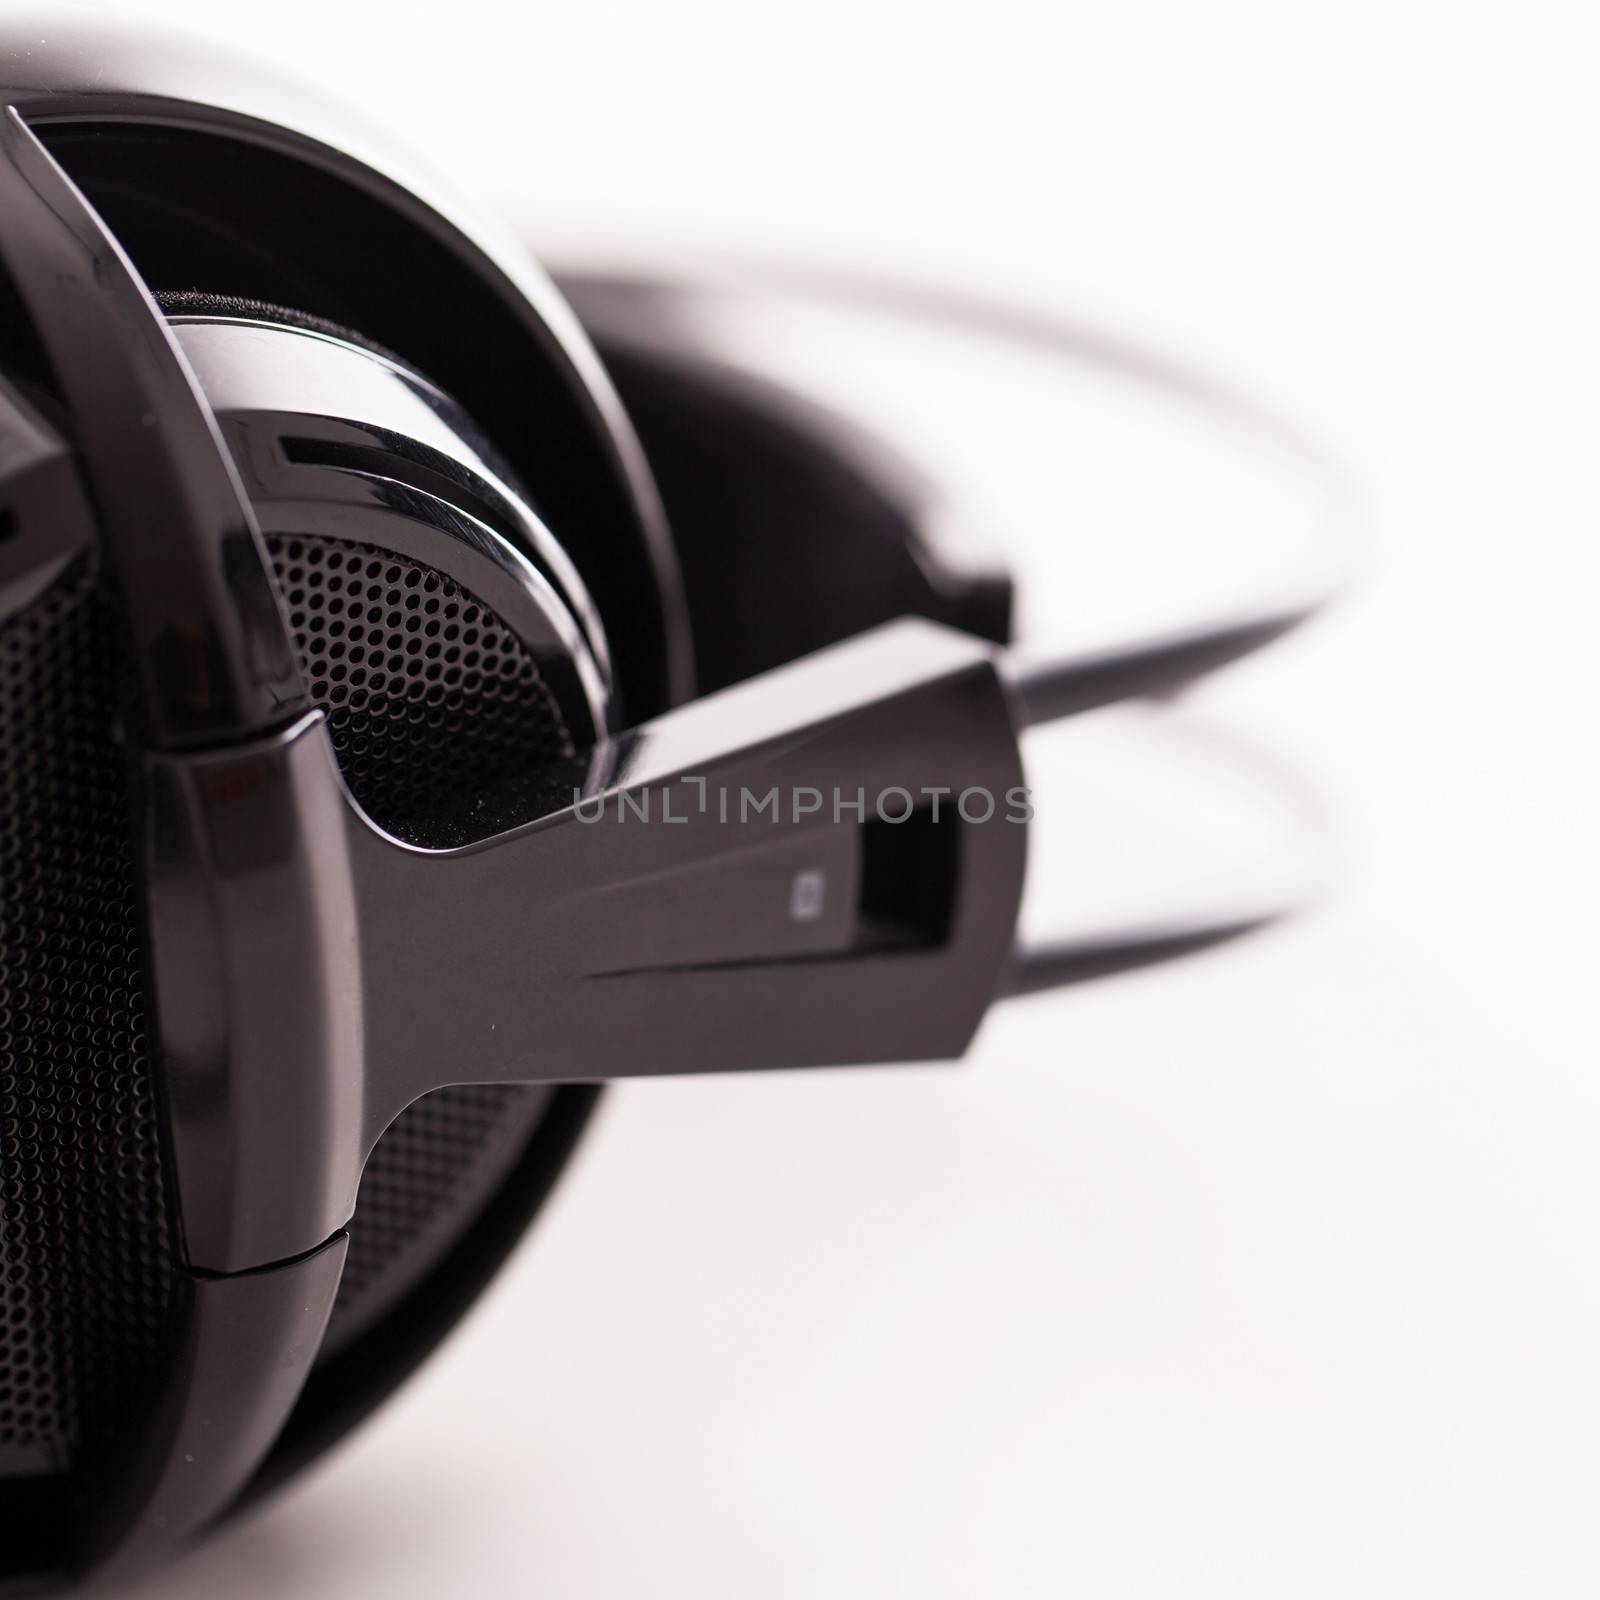 Closeup image of big black headphones on a white background